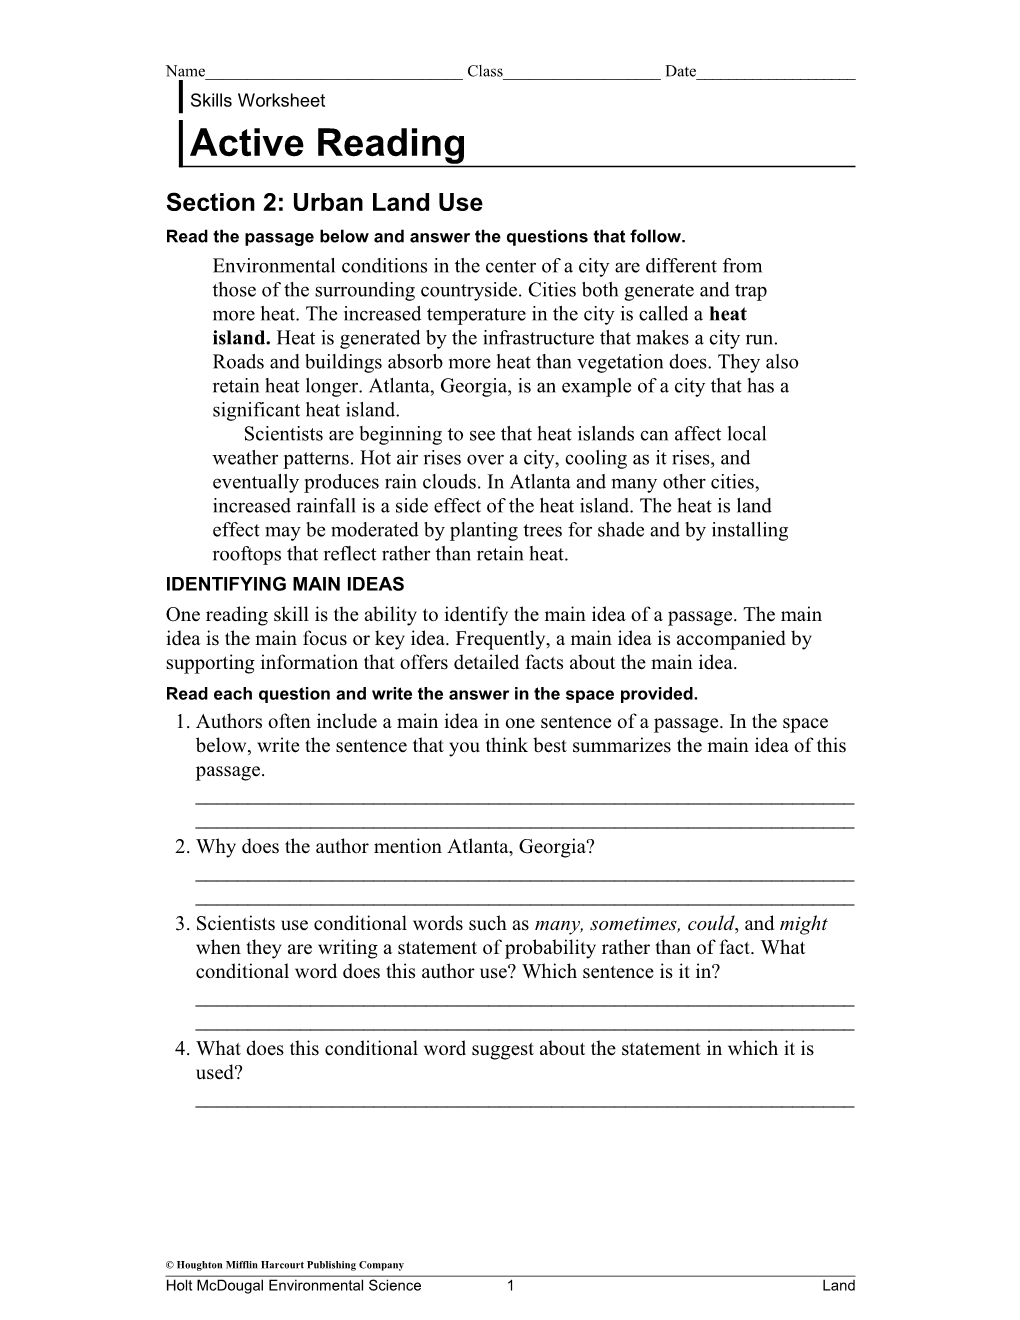 Section 2: Urban Land Use